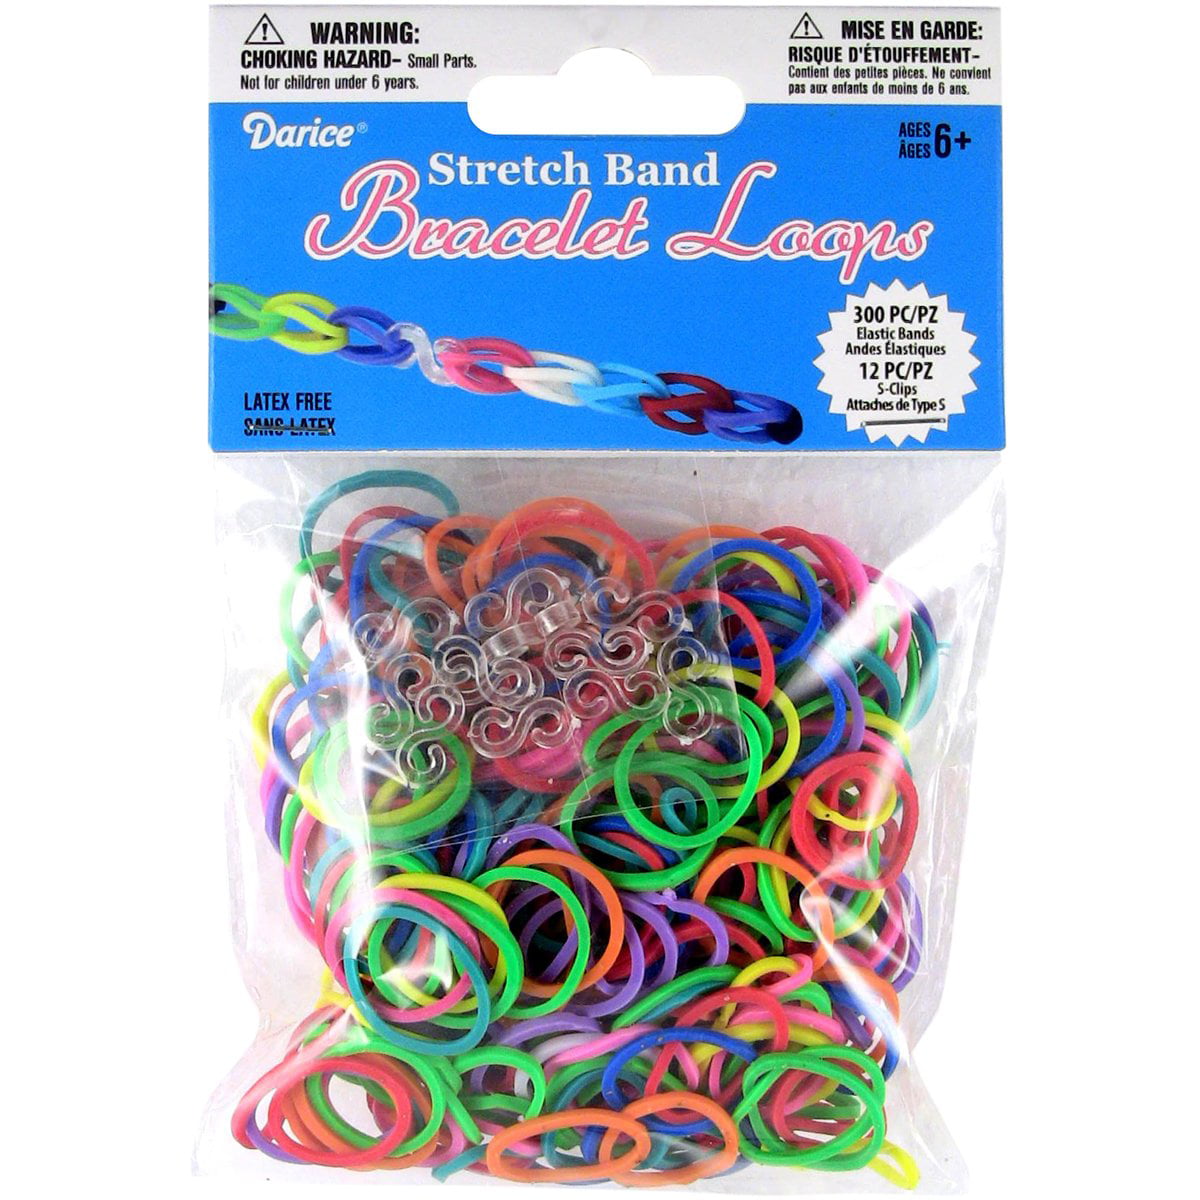 Stretch Band Bracelet Loops Assorted Colors - Walmart.com - Walmart.com